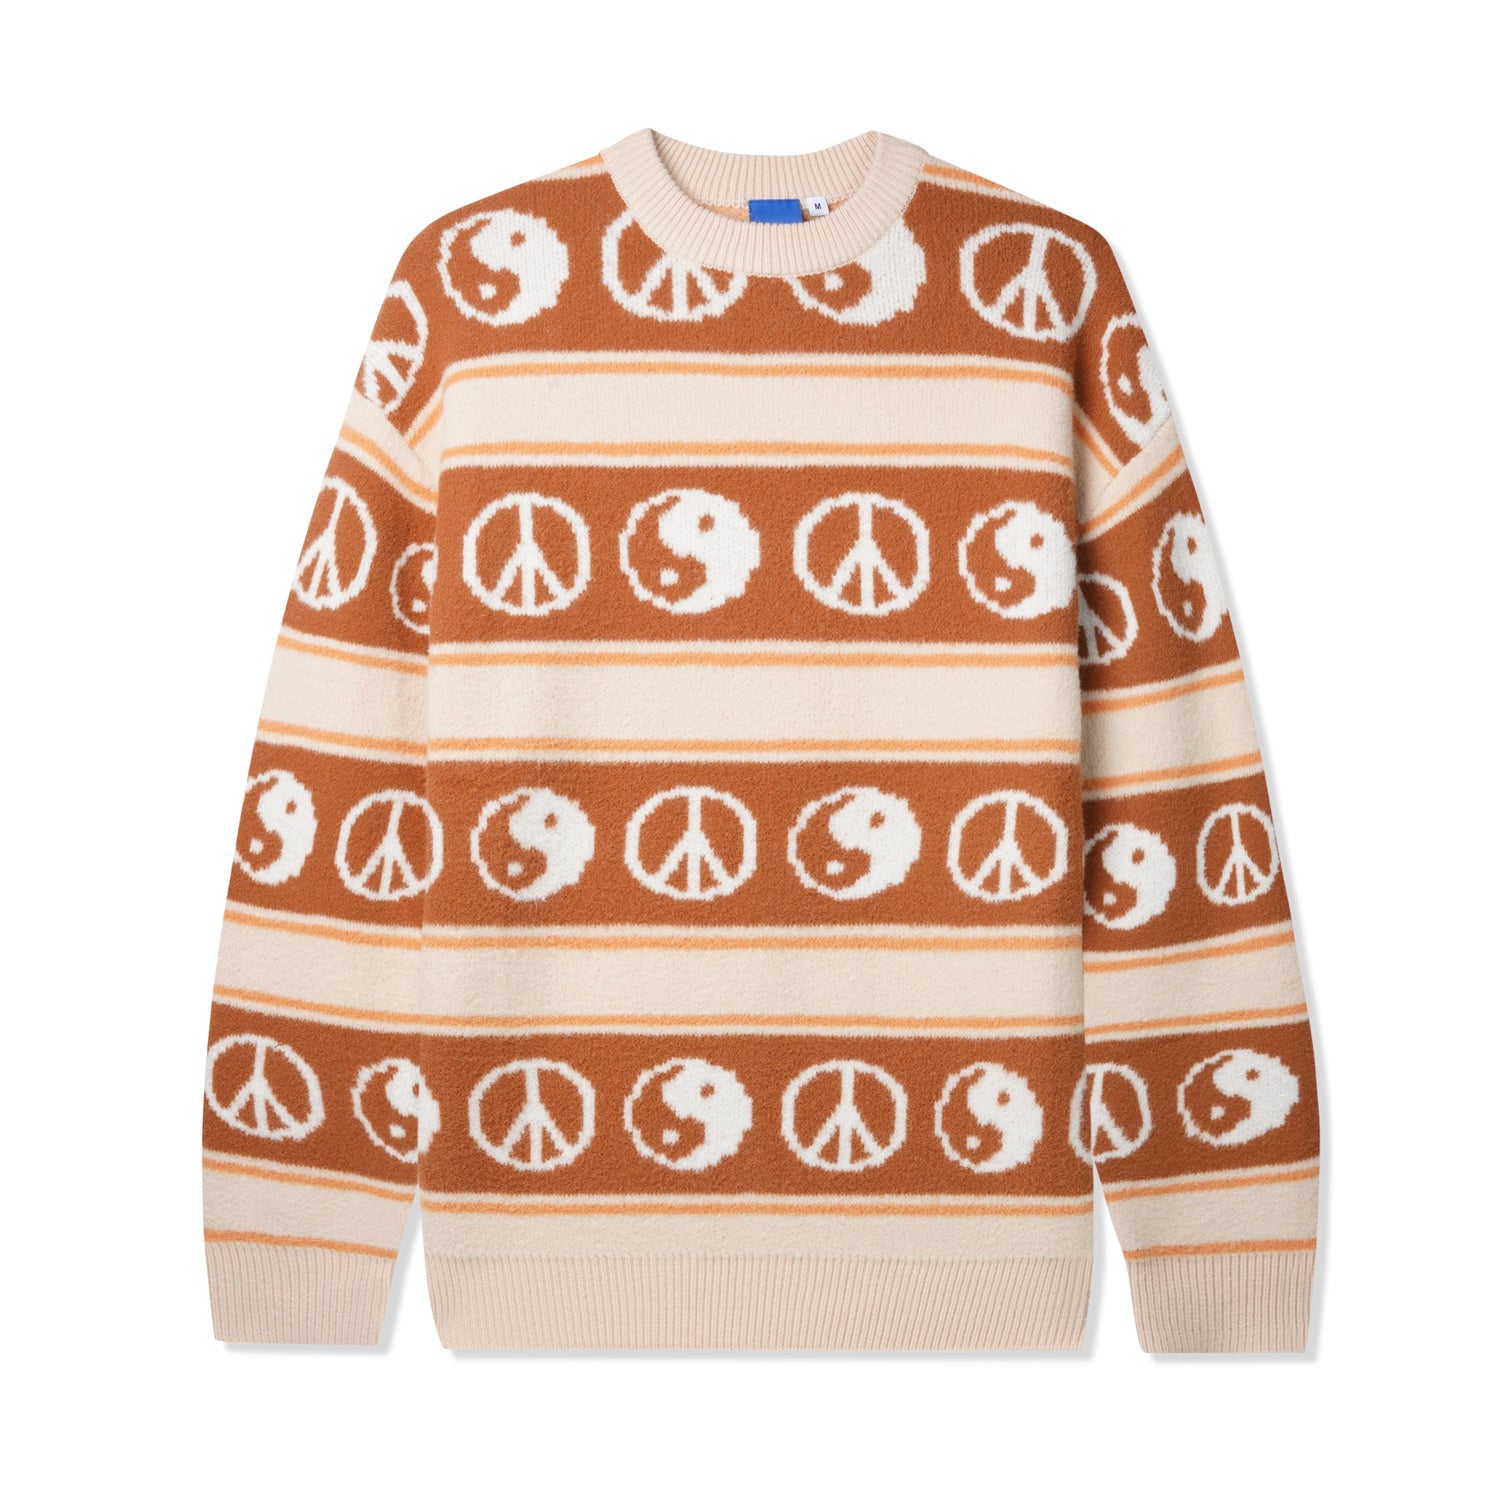 Balance Mohair Knitted Sweater, Tan / Brown / Orange